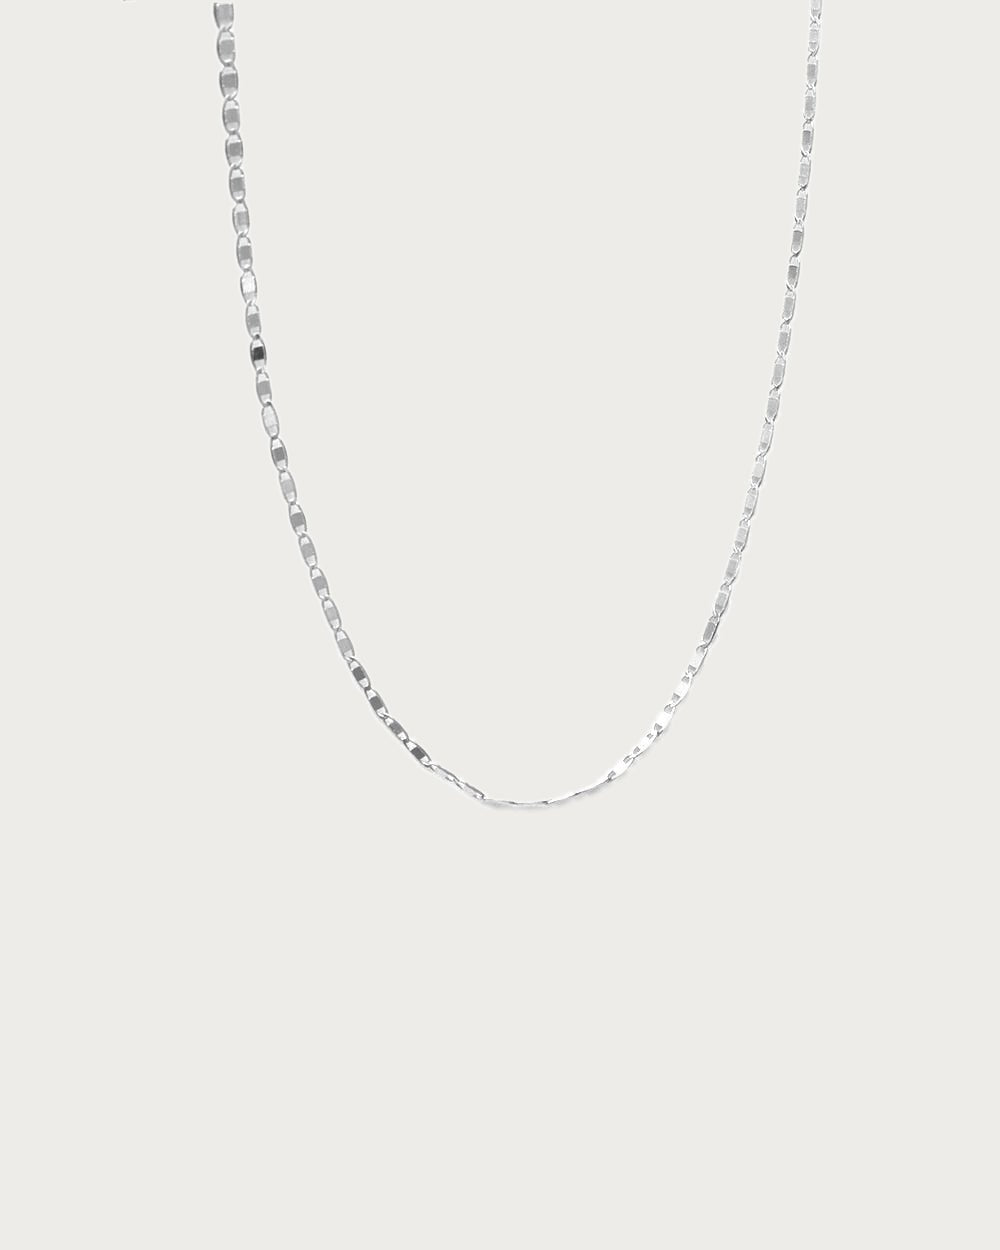 Caroline Mariner Necklace in Silver